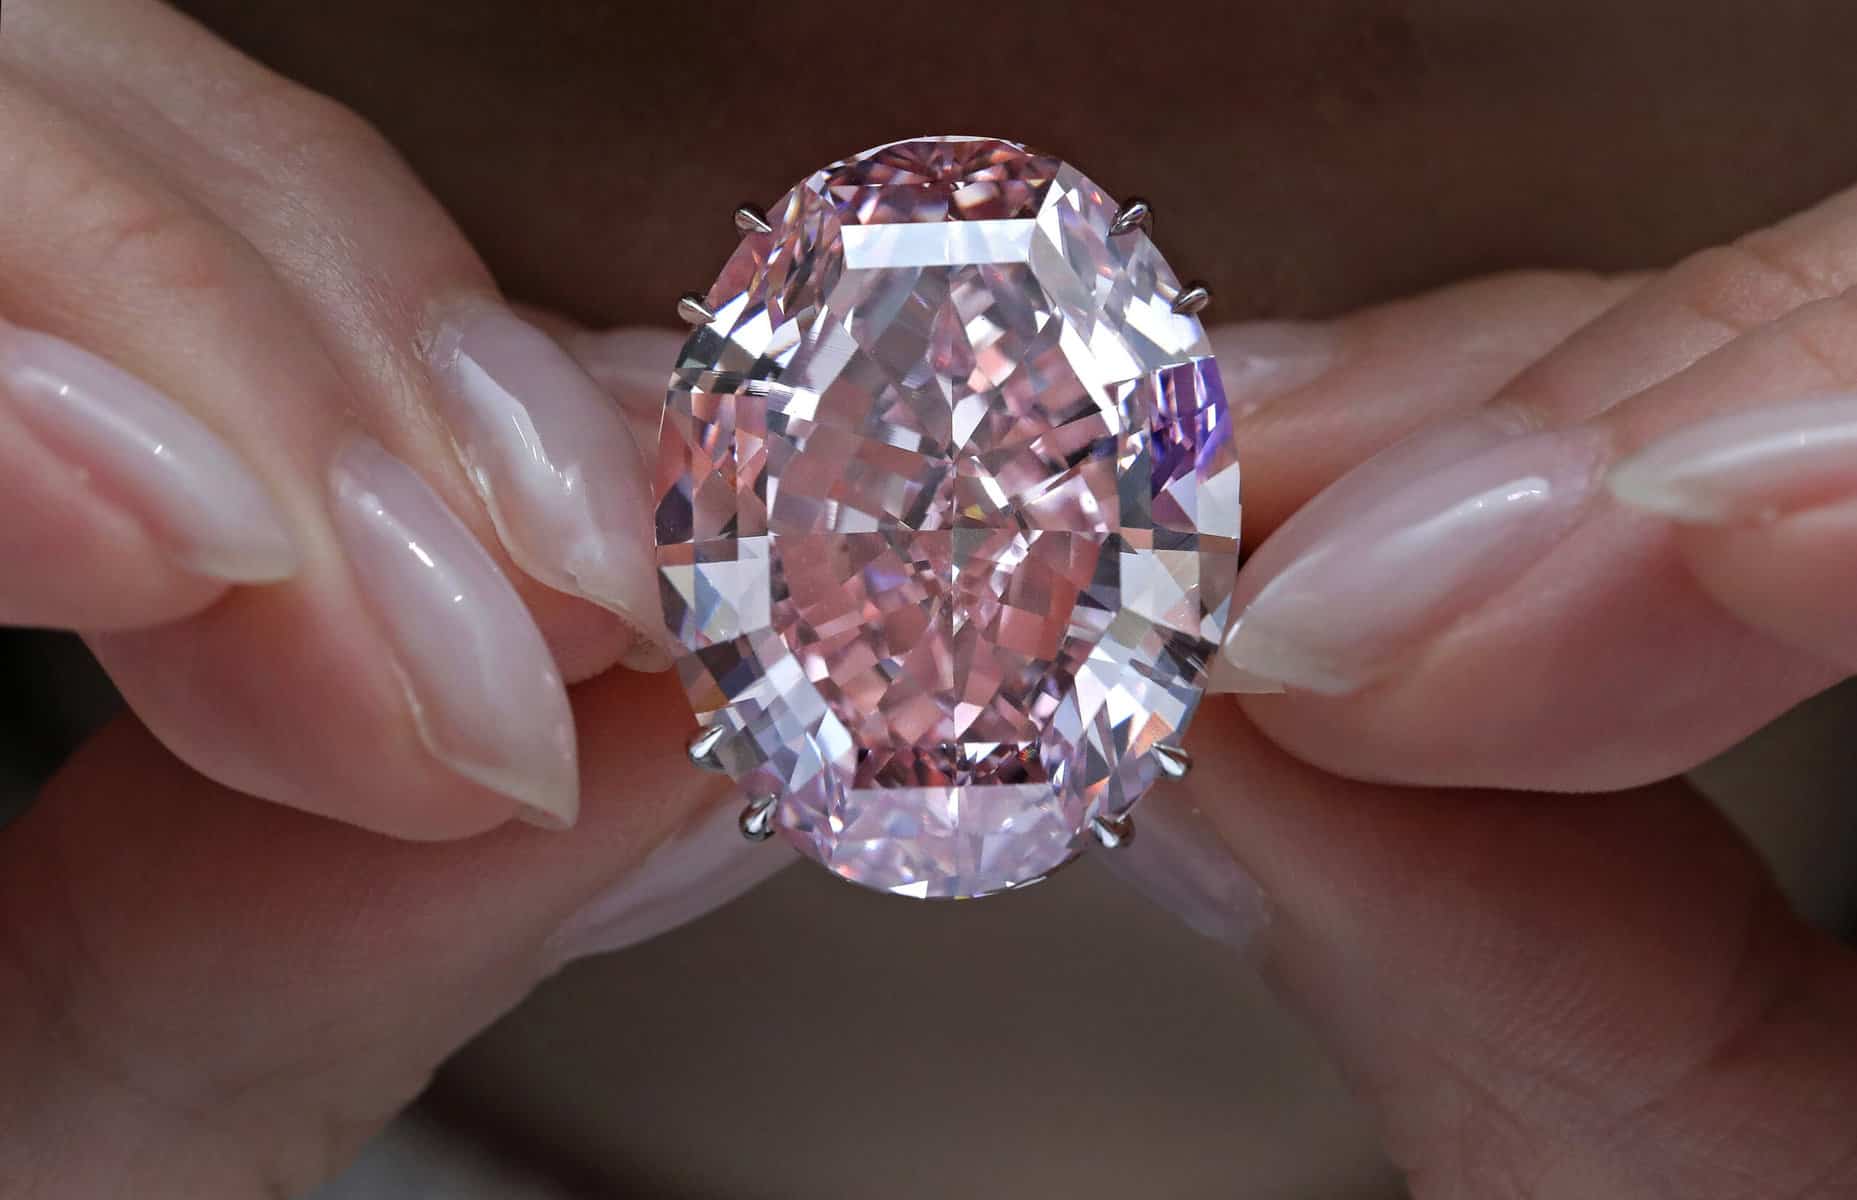 The Pink Star diamond